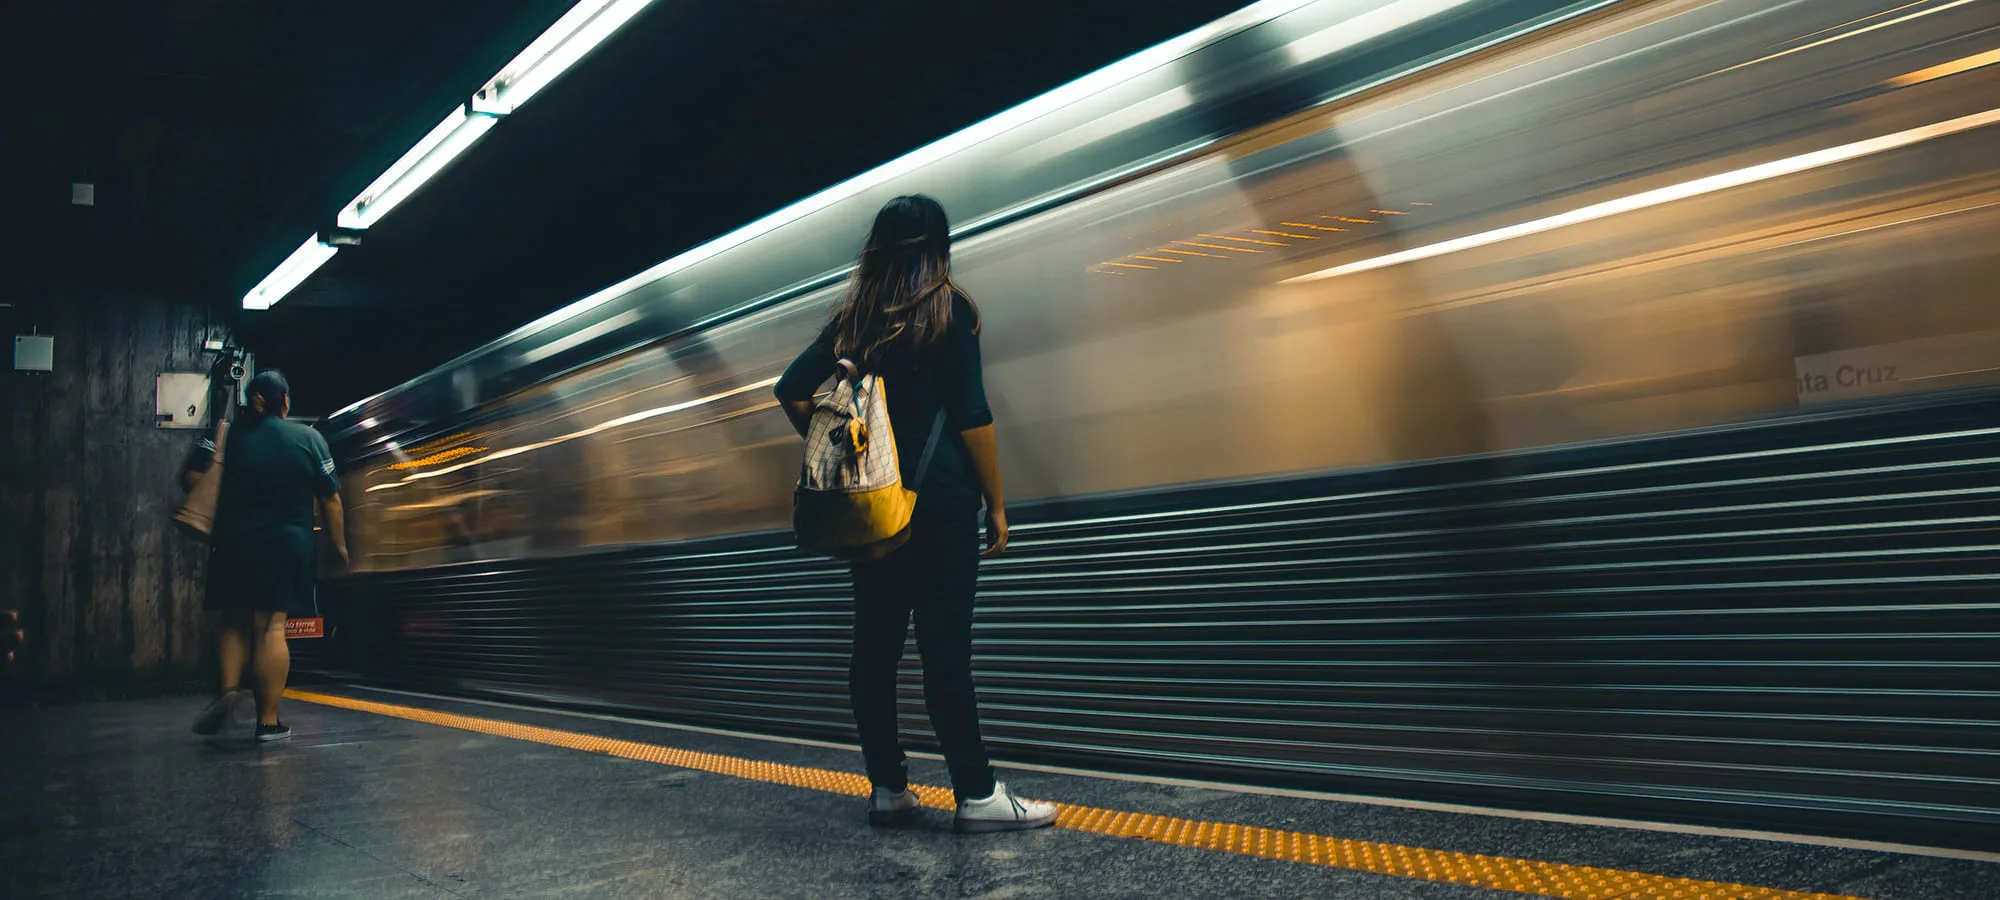 woman with bag standing on train platform